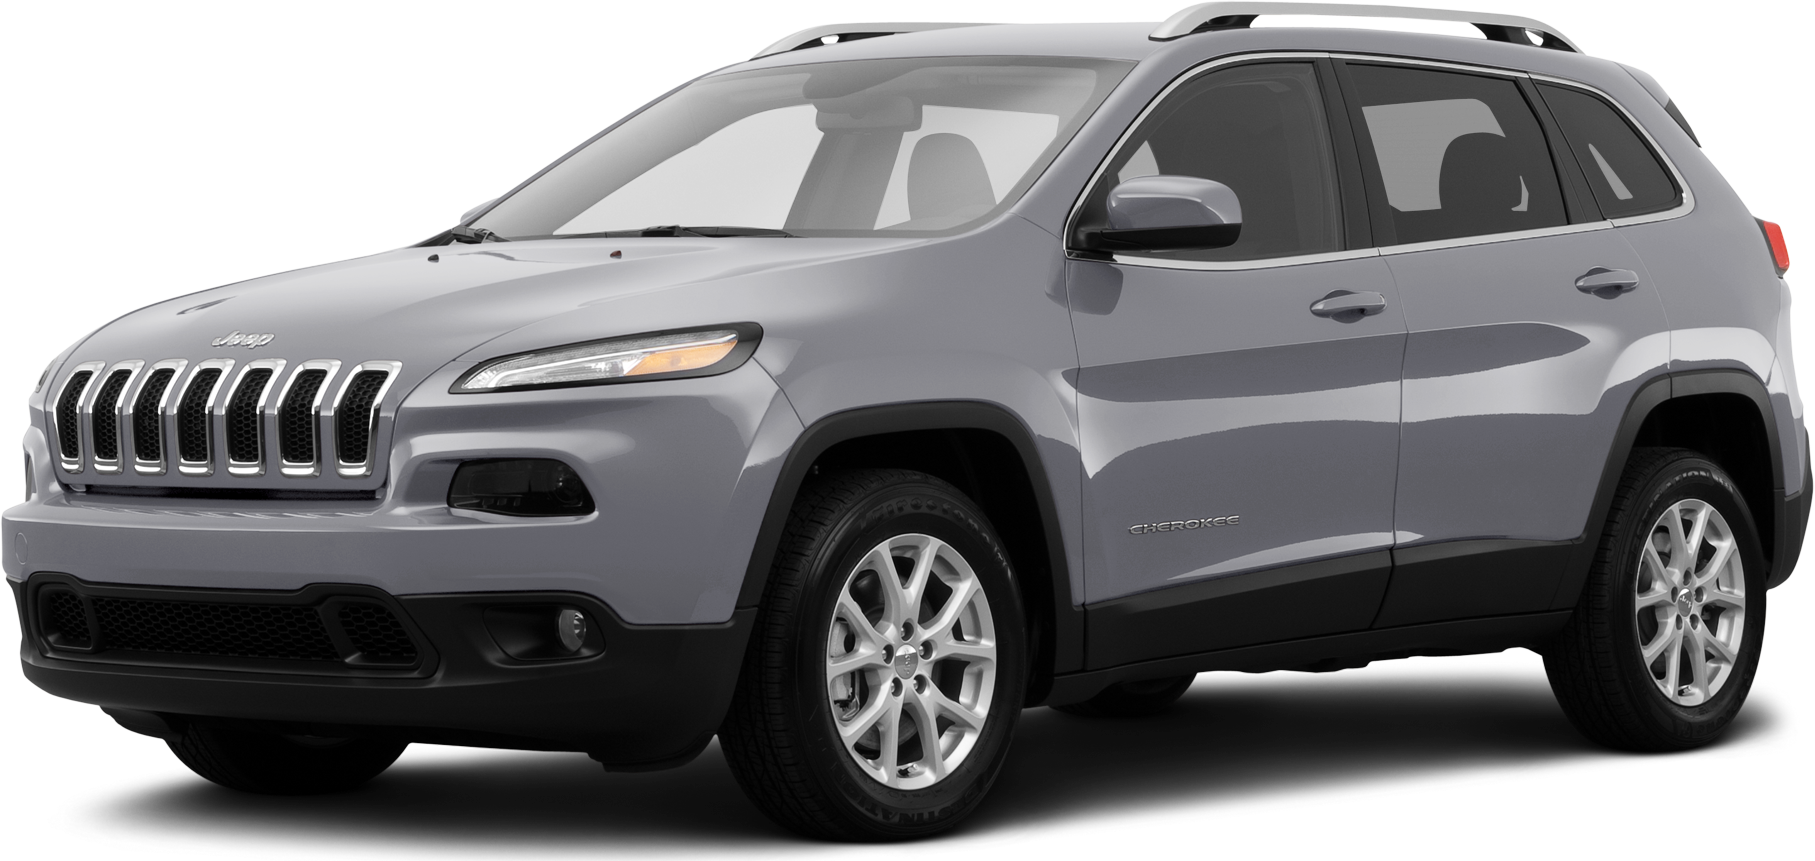 2014 Jeep Cherokee Price, Value, Ratings & Reviews | Kelley Blue Book